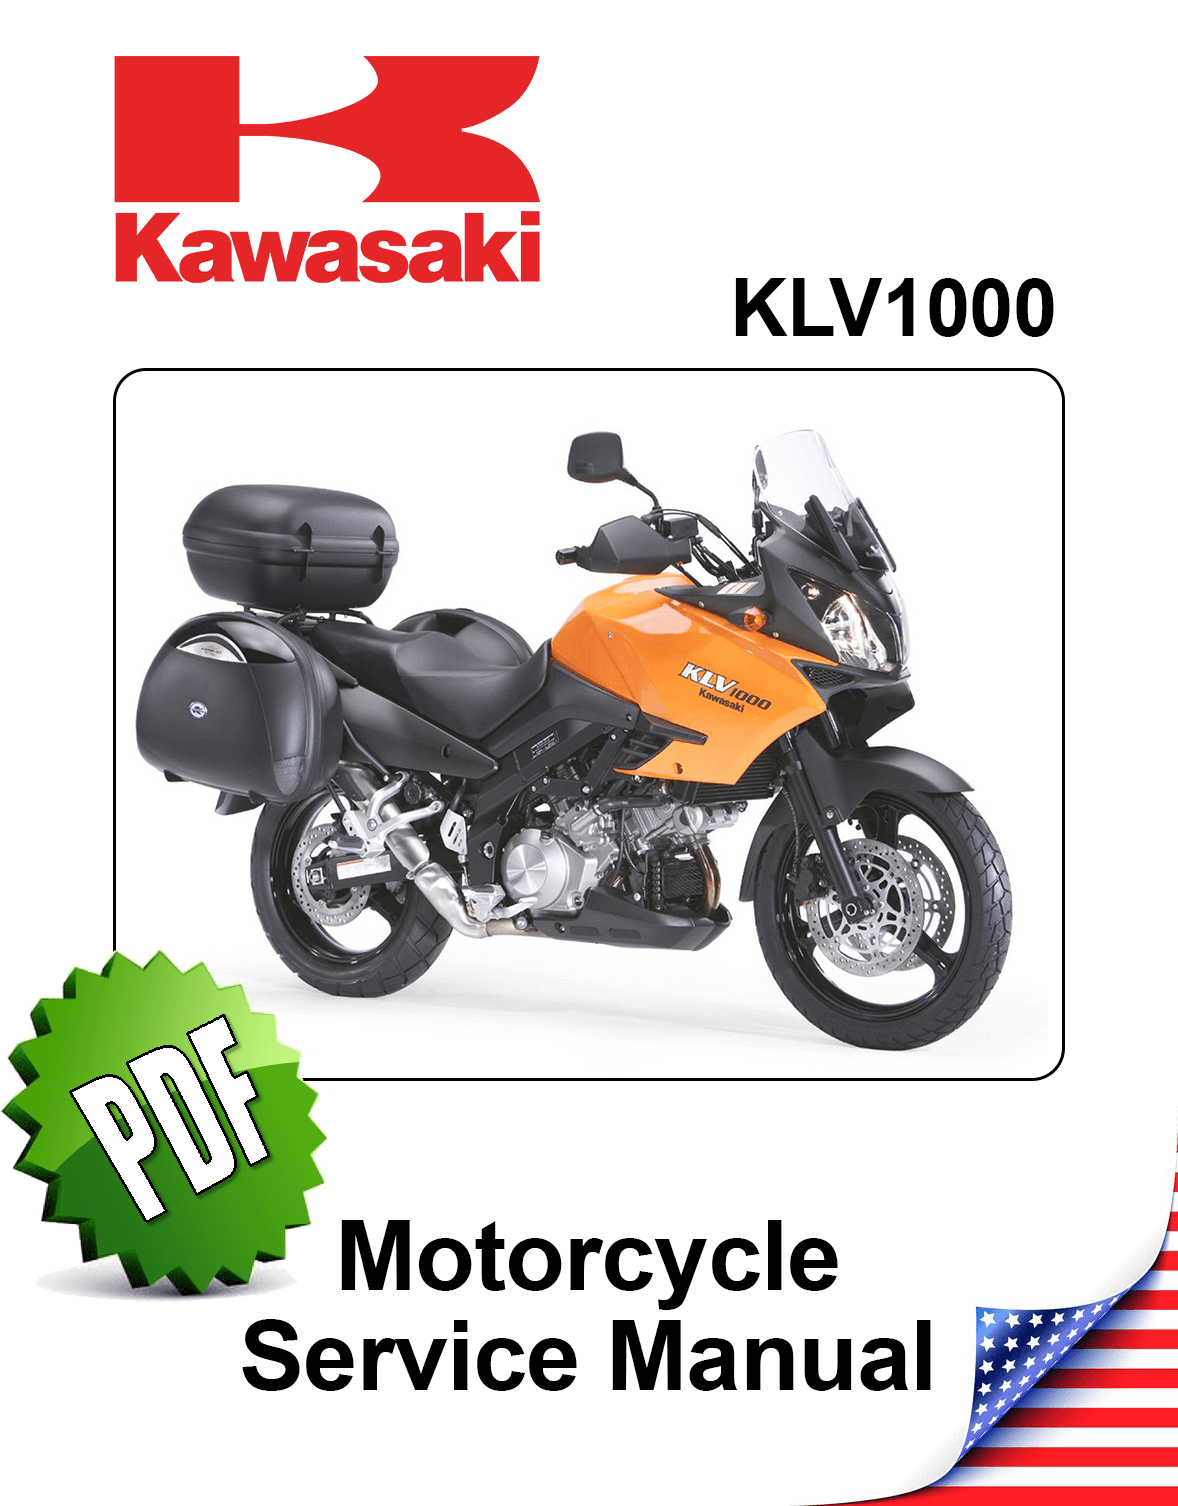 Kawasaki KLV1000 K4, K5, K7 service manual Models 2004 to 2007